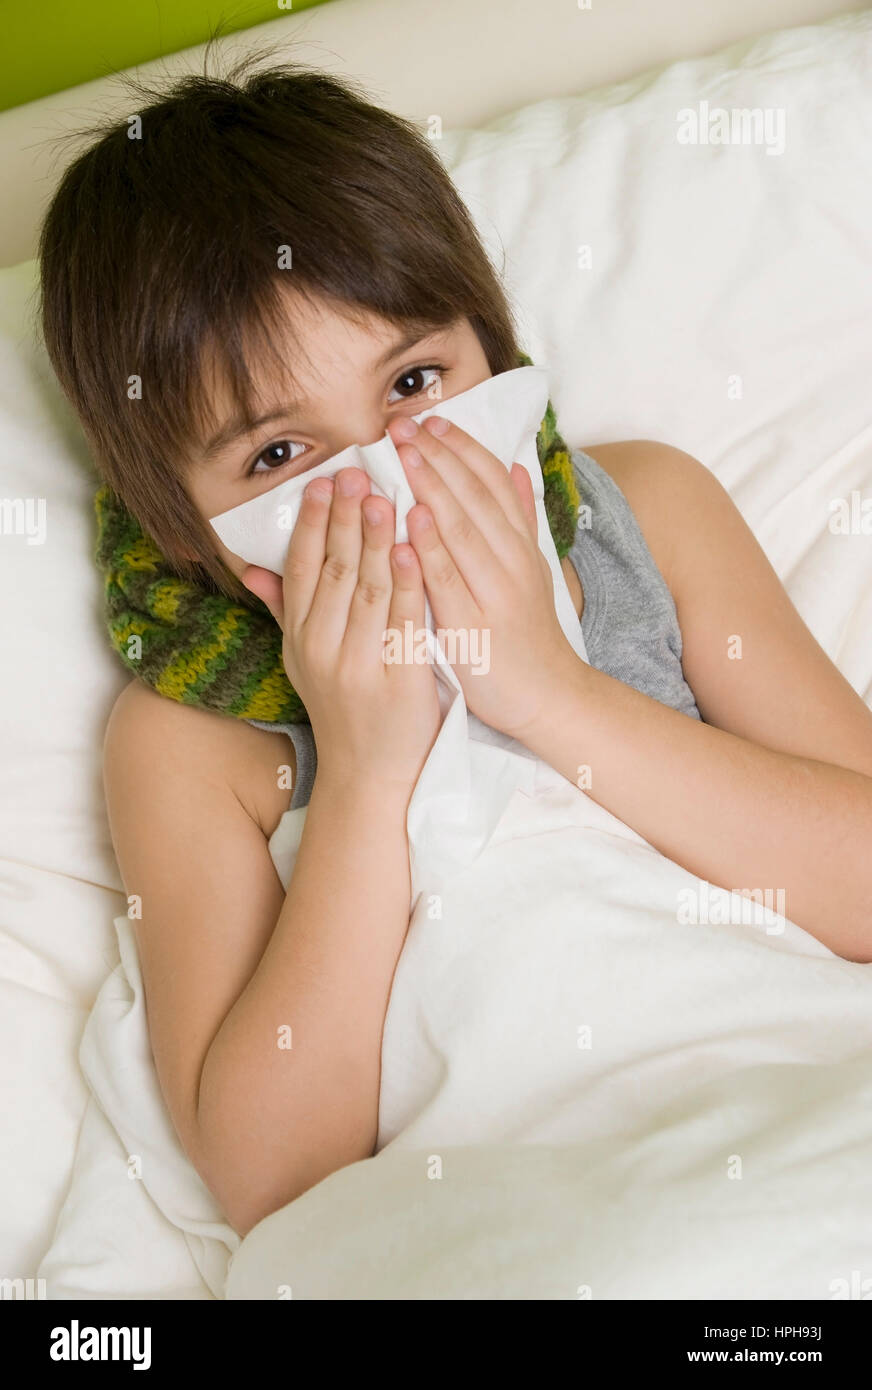 Kranker Junge schneuzt sich im Bett - sick boy in bed blows his nose, Model released Stock Photo